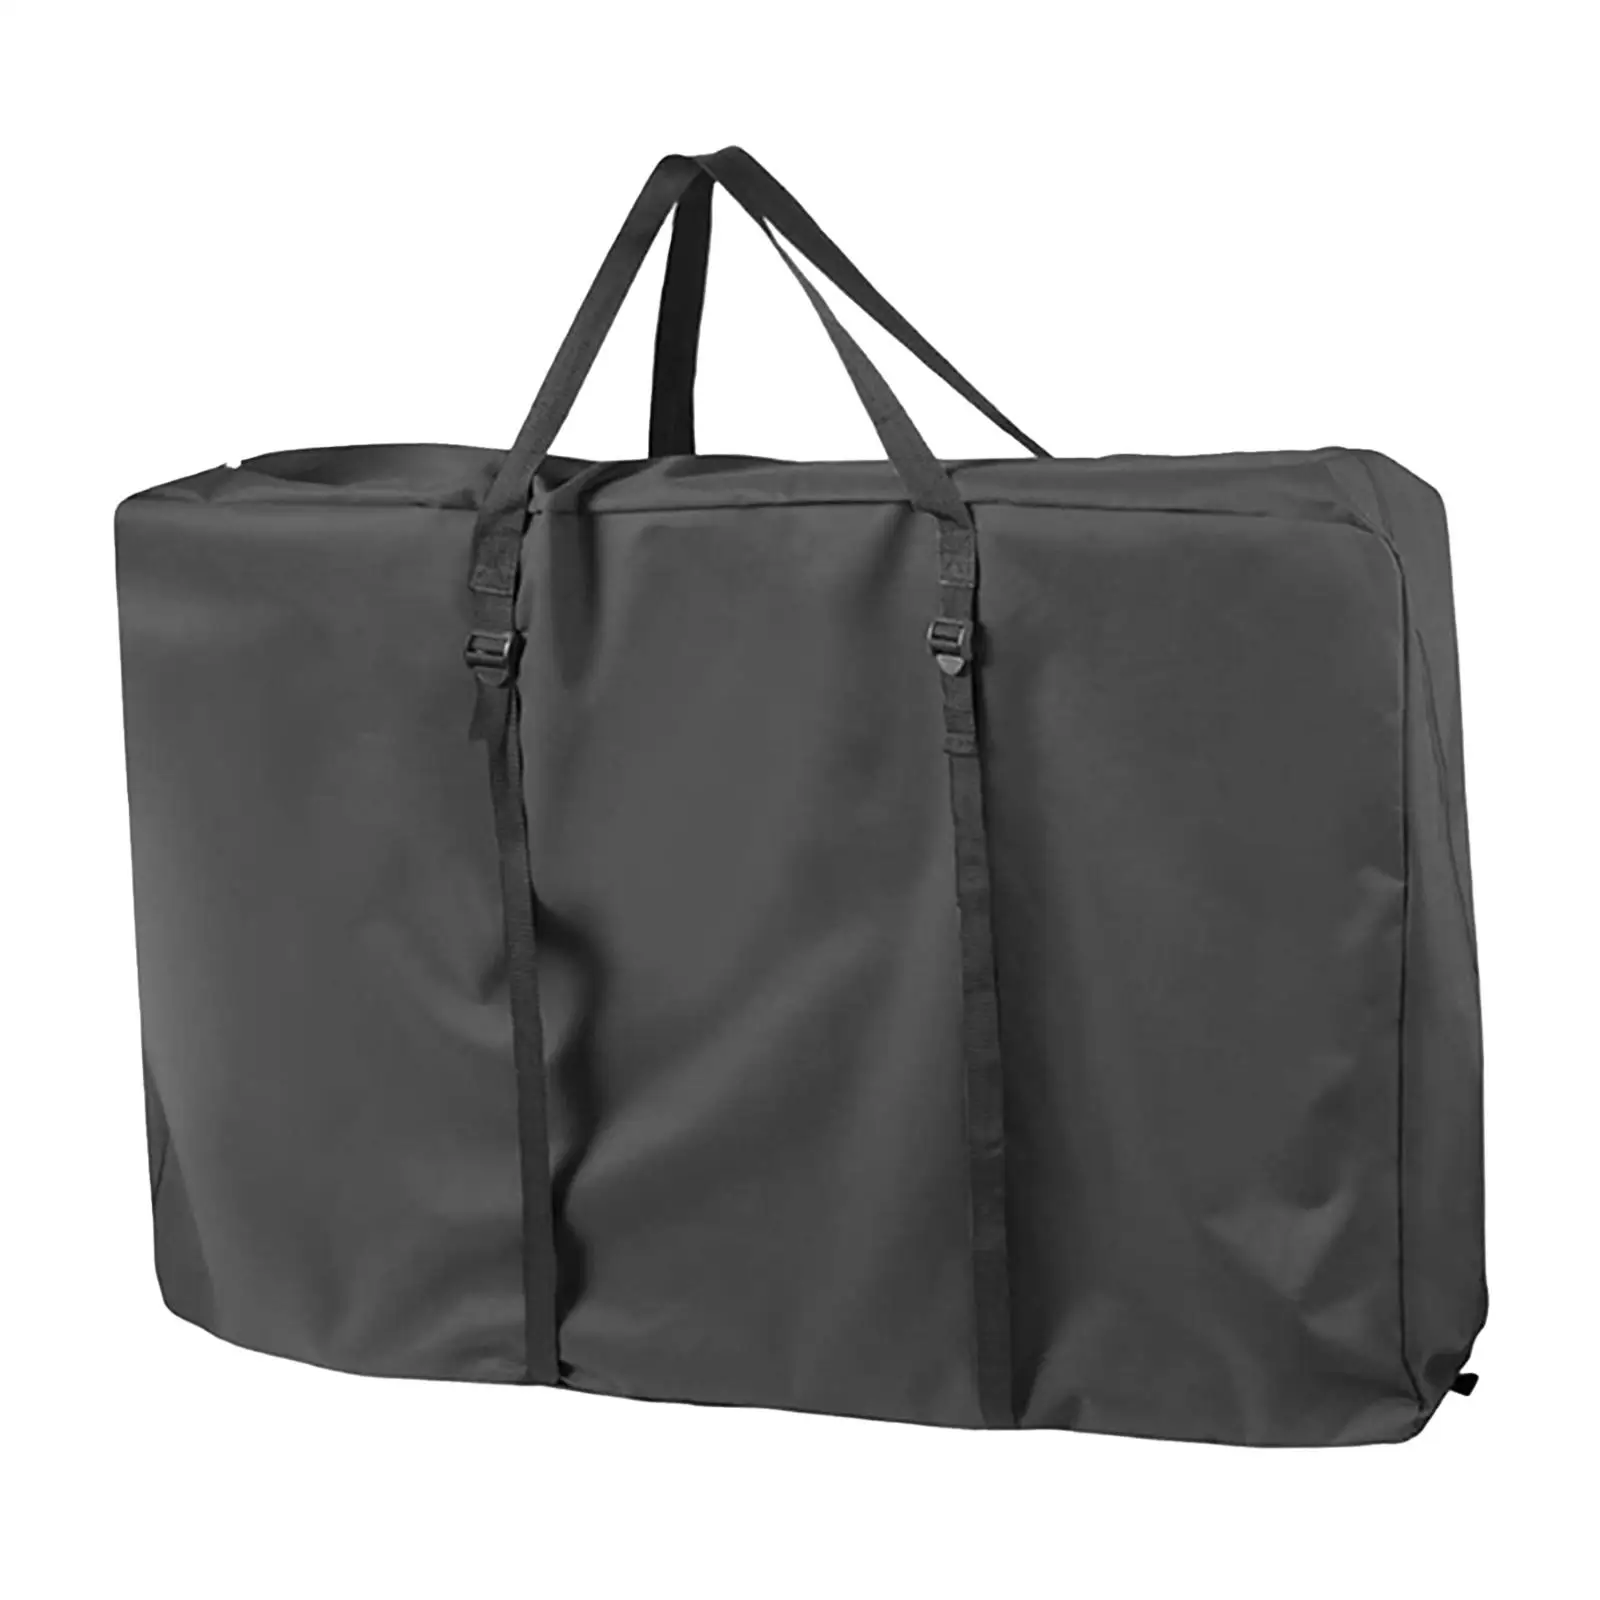 Bag for Wheelchair Gym for for Foldable Wheelchairs Organizer Oxford Cloth Duffel Bag Folding Carry Bag Bikes Travel Bag